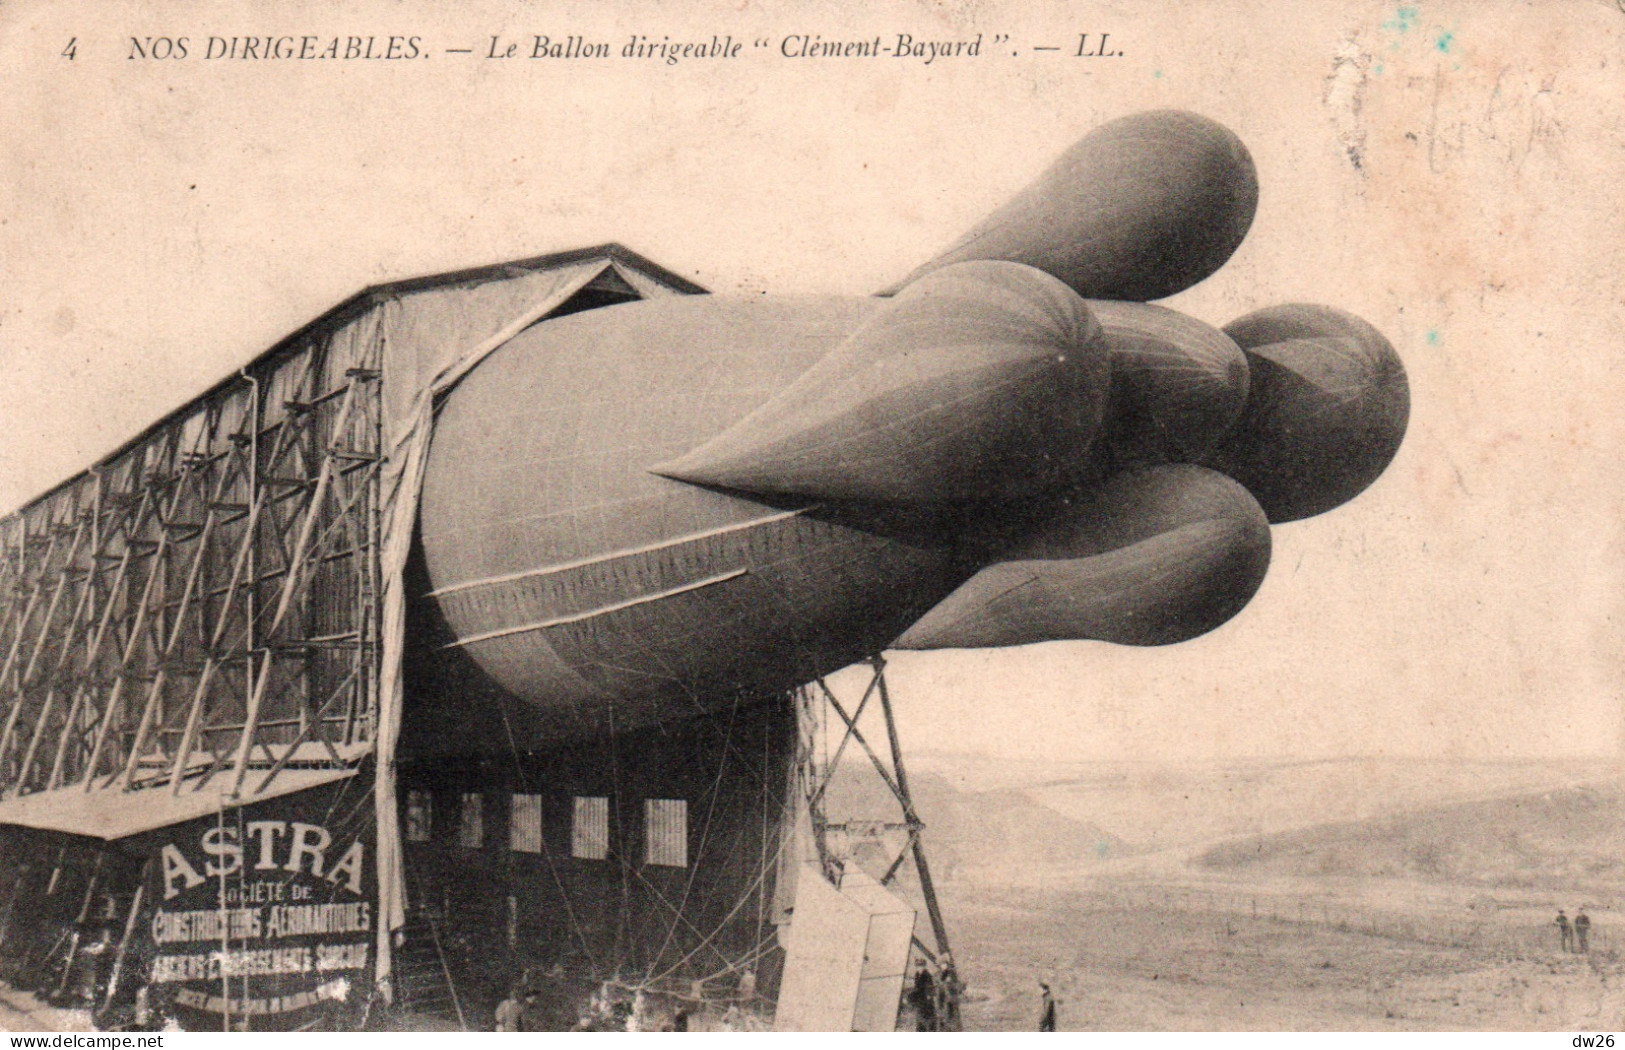 Nos Dirigeables: Le Ballon Dirigeable Clément-Bayard Sortant Du Hangar (Construction Société Astra) Carte LL N° 4 - Airships